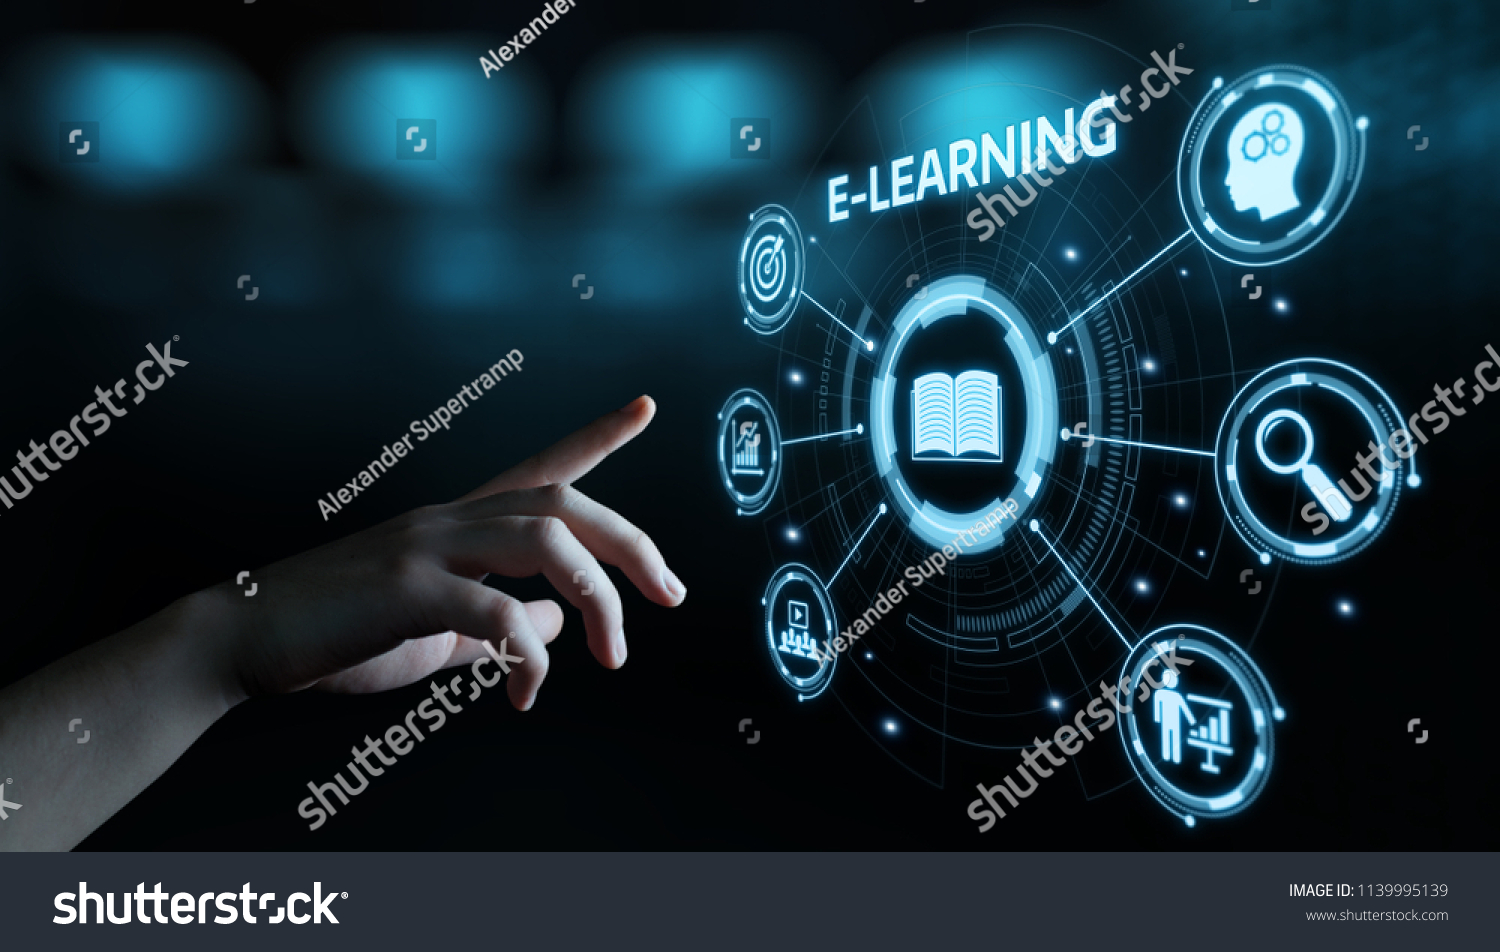 E-learning Education Internet Technology Webinar Online Courses concept. #1139995139